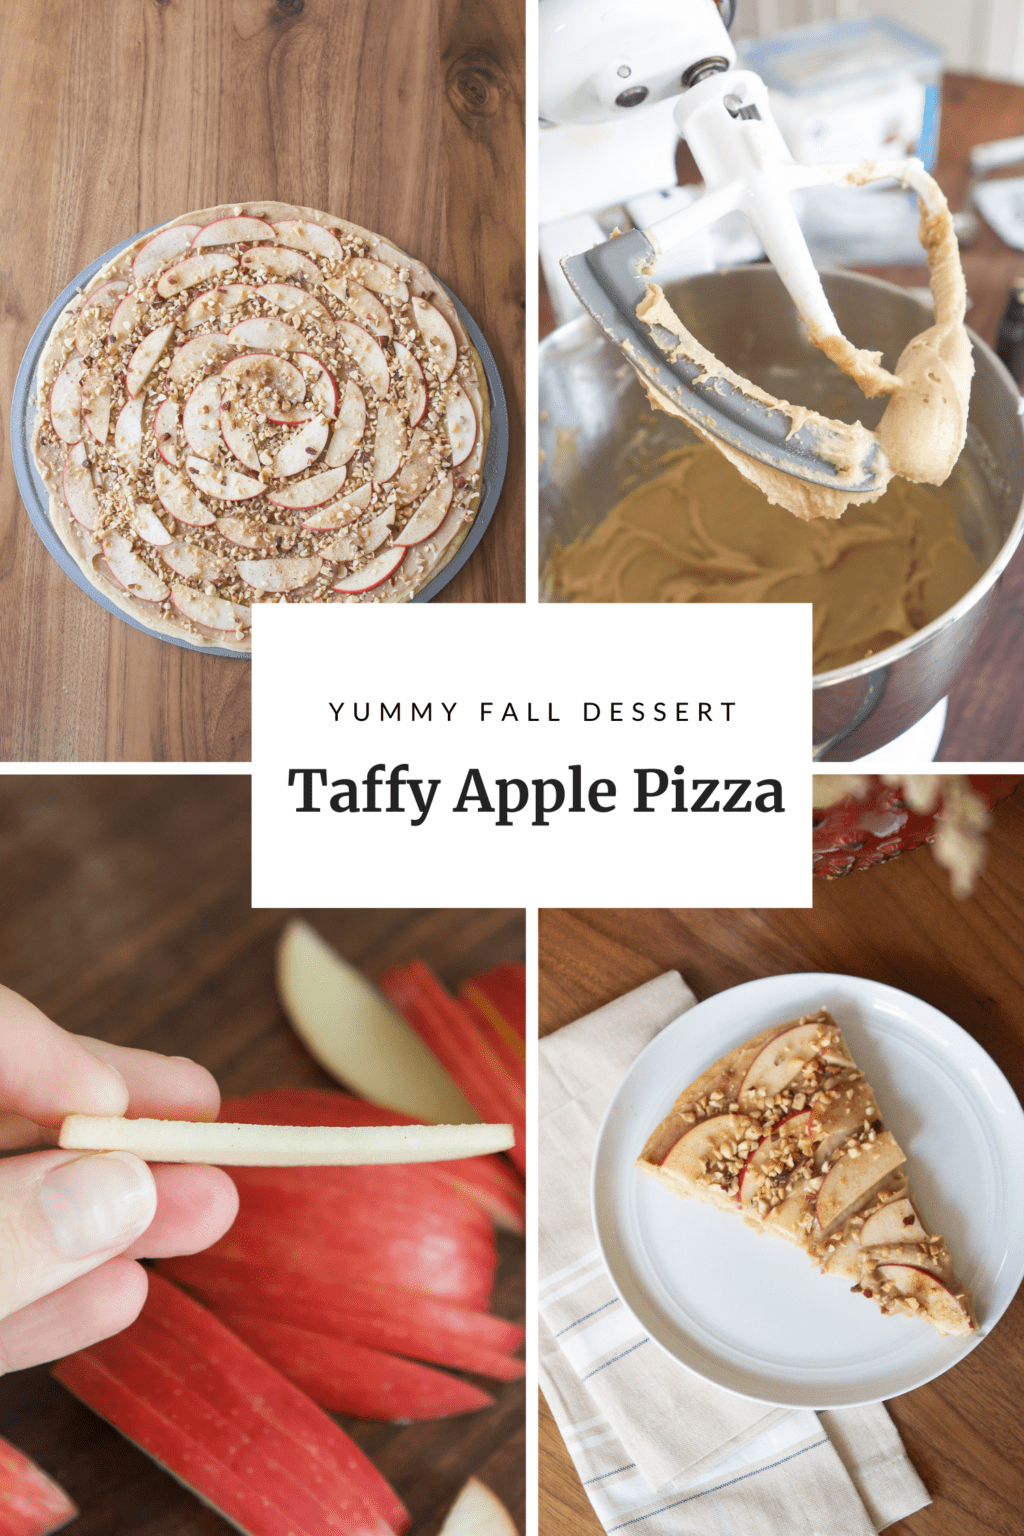 A yummy taffy apple pizza recipe for fall dessert